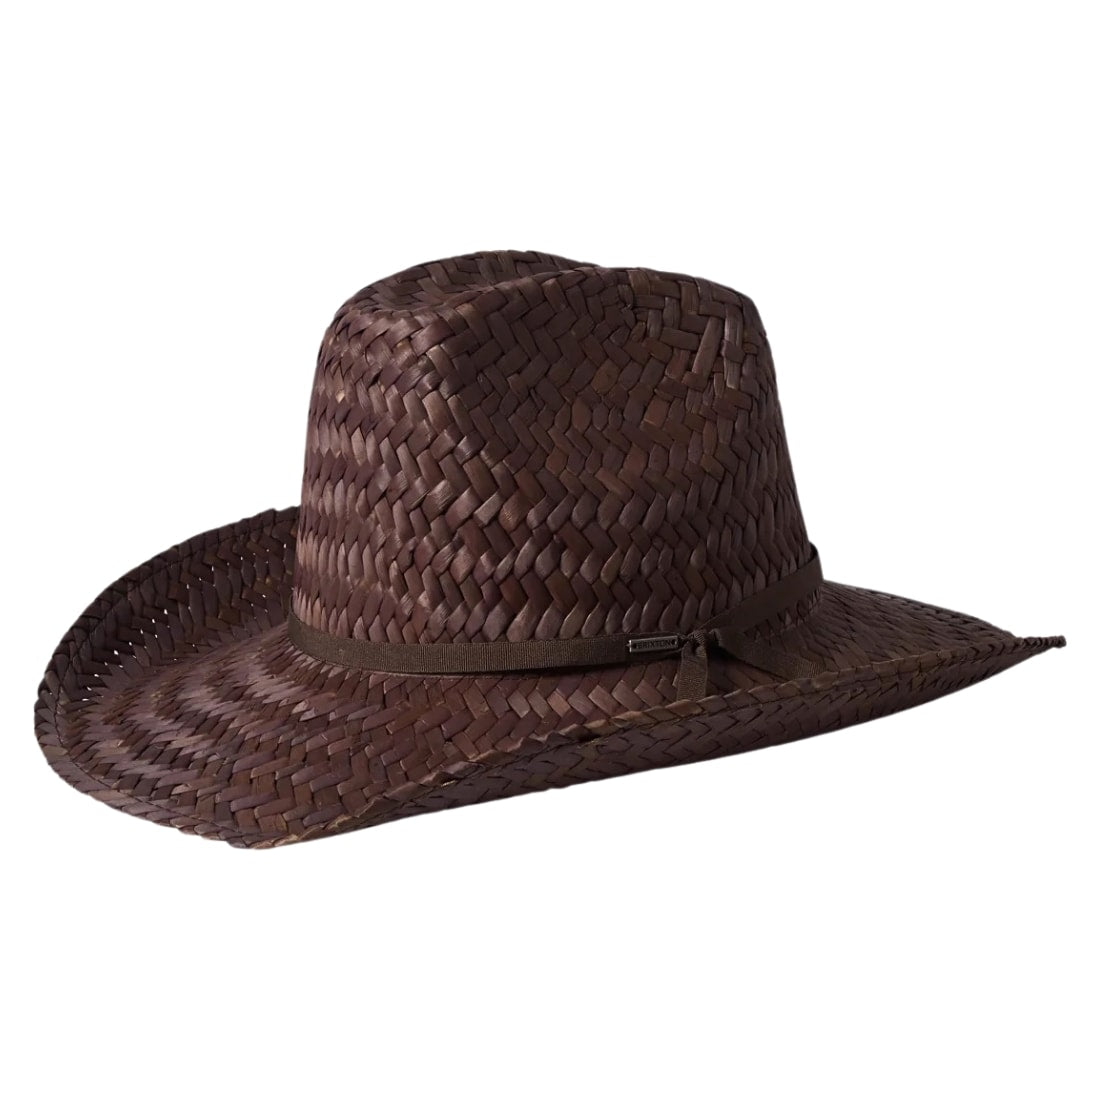 Brixton Houston Straw Cowboy Hat - Toffee - Fedora/Trilby Hat by Brixton